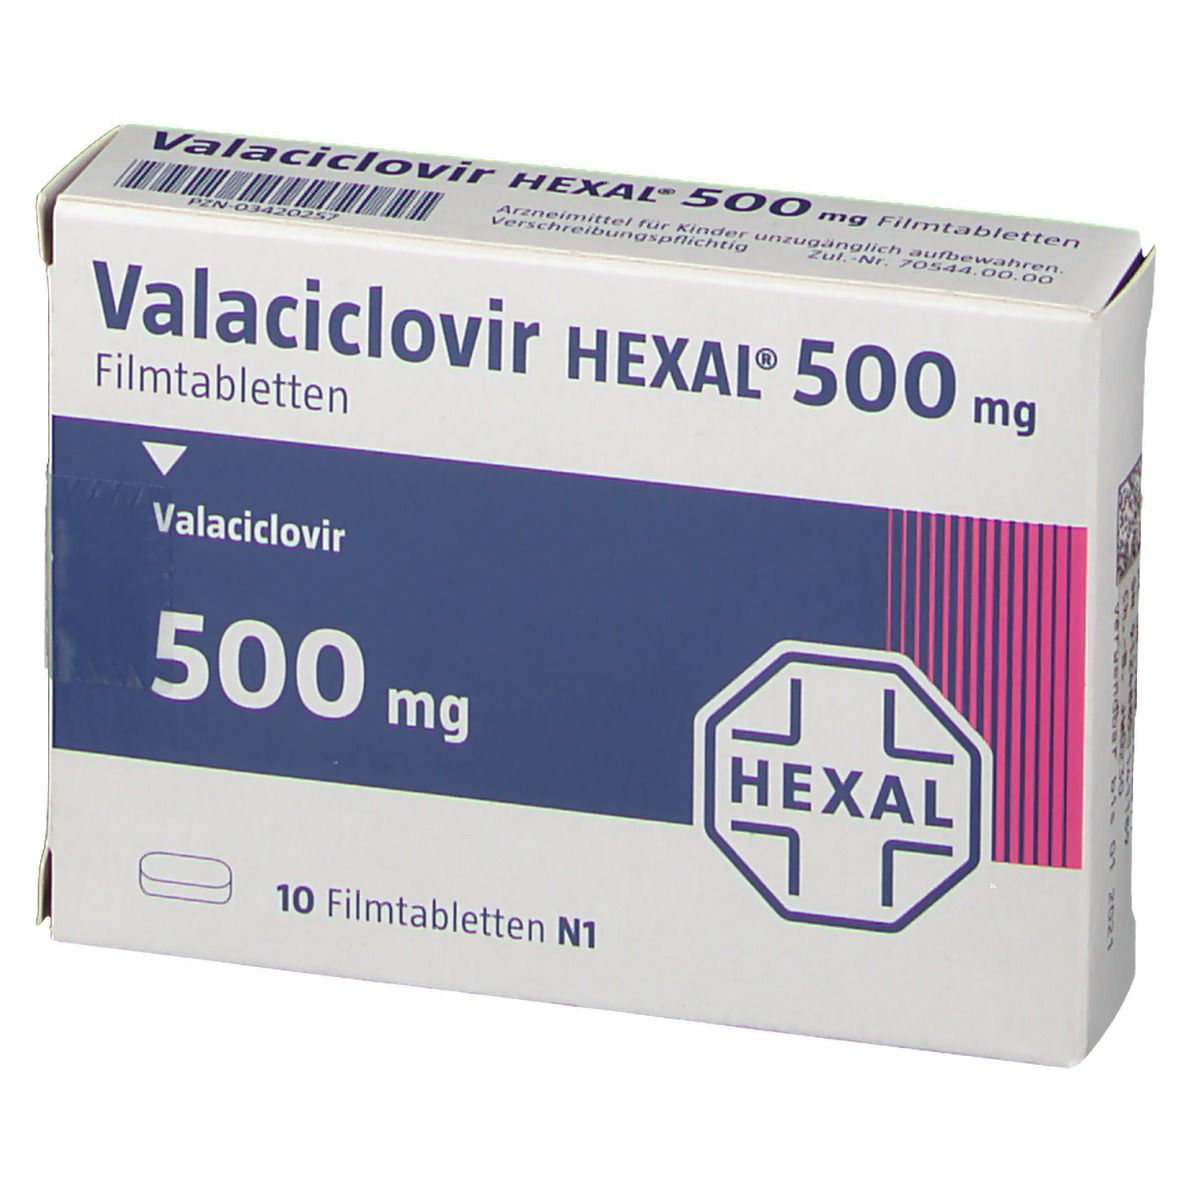 Valaciclovir HEXAL® 500 mg